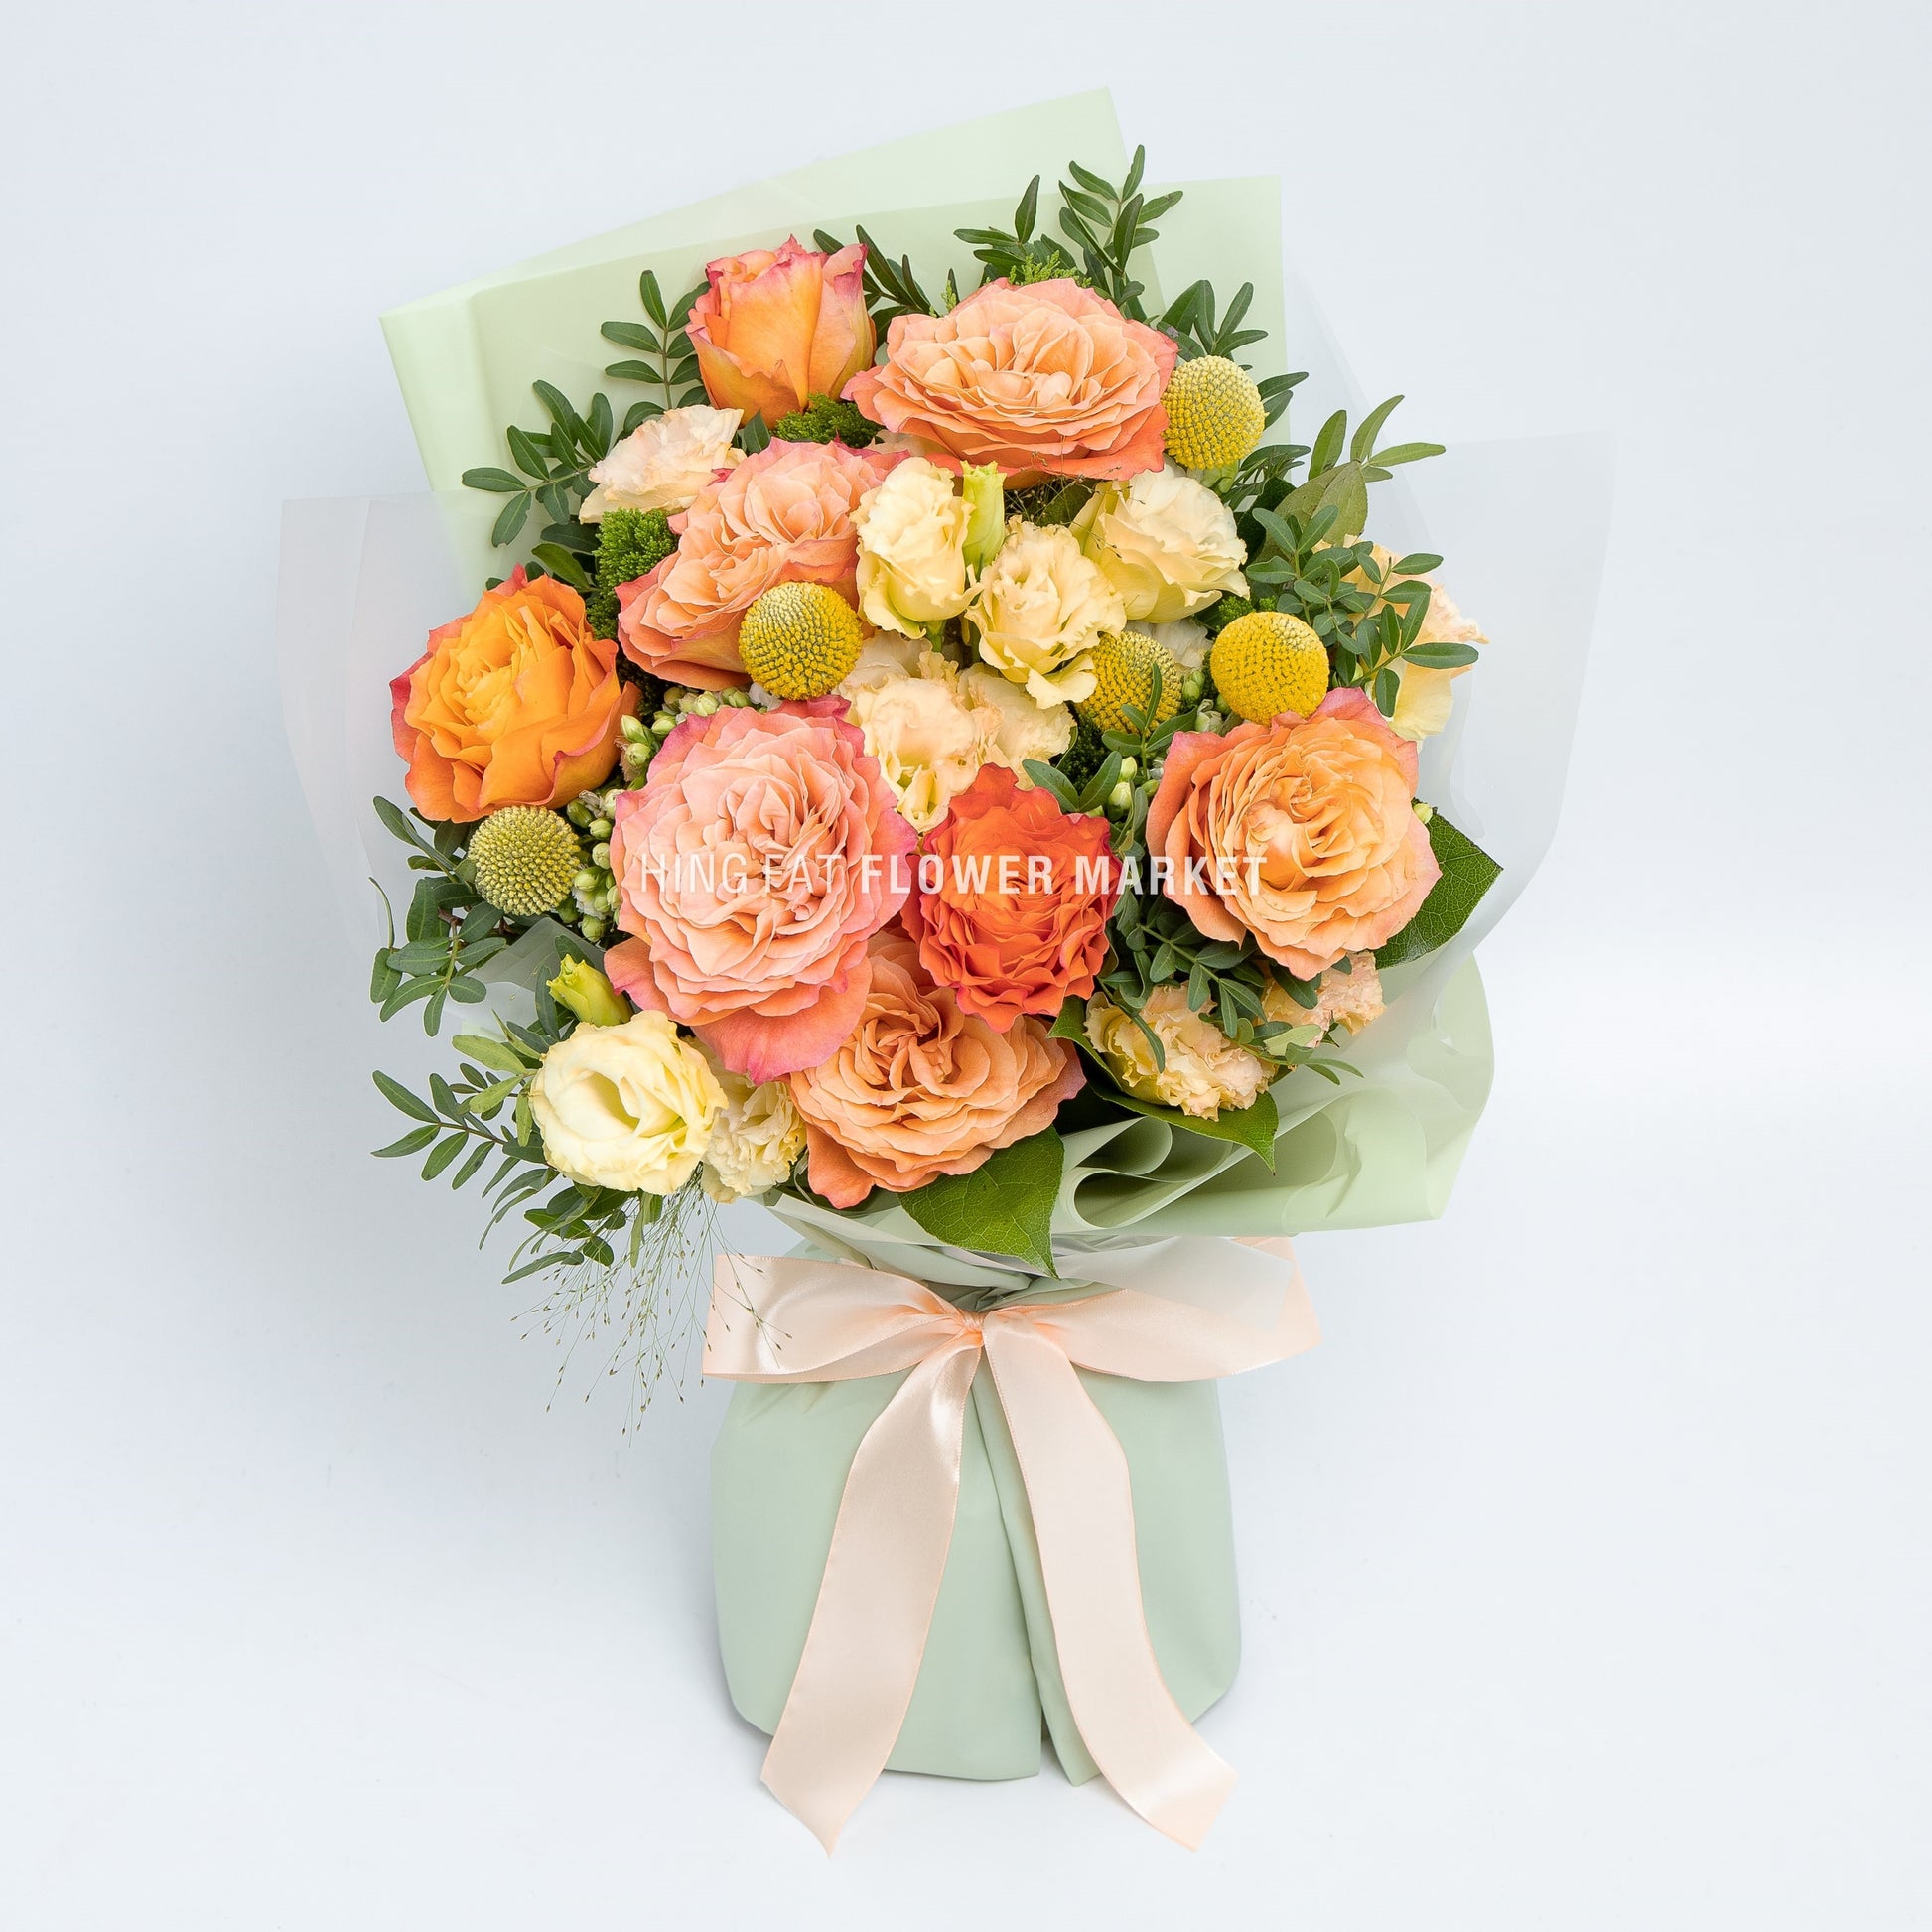 橙玫瑰桔梗花束 Orange rose and eustoma bouquet